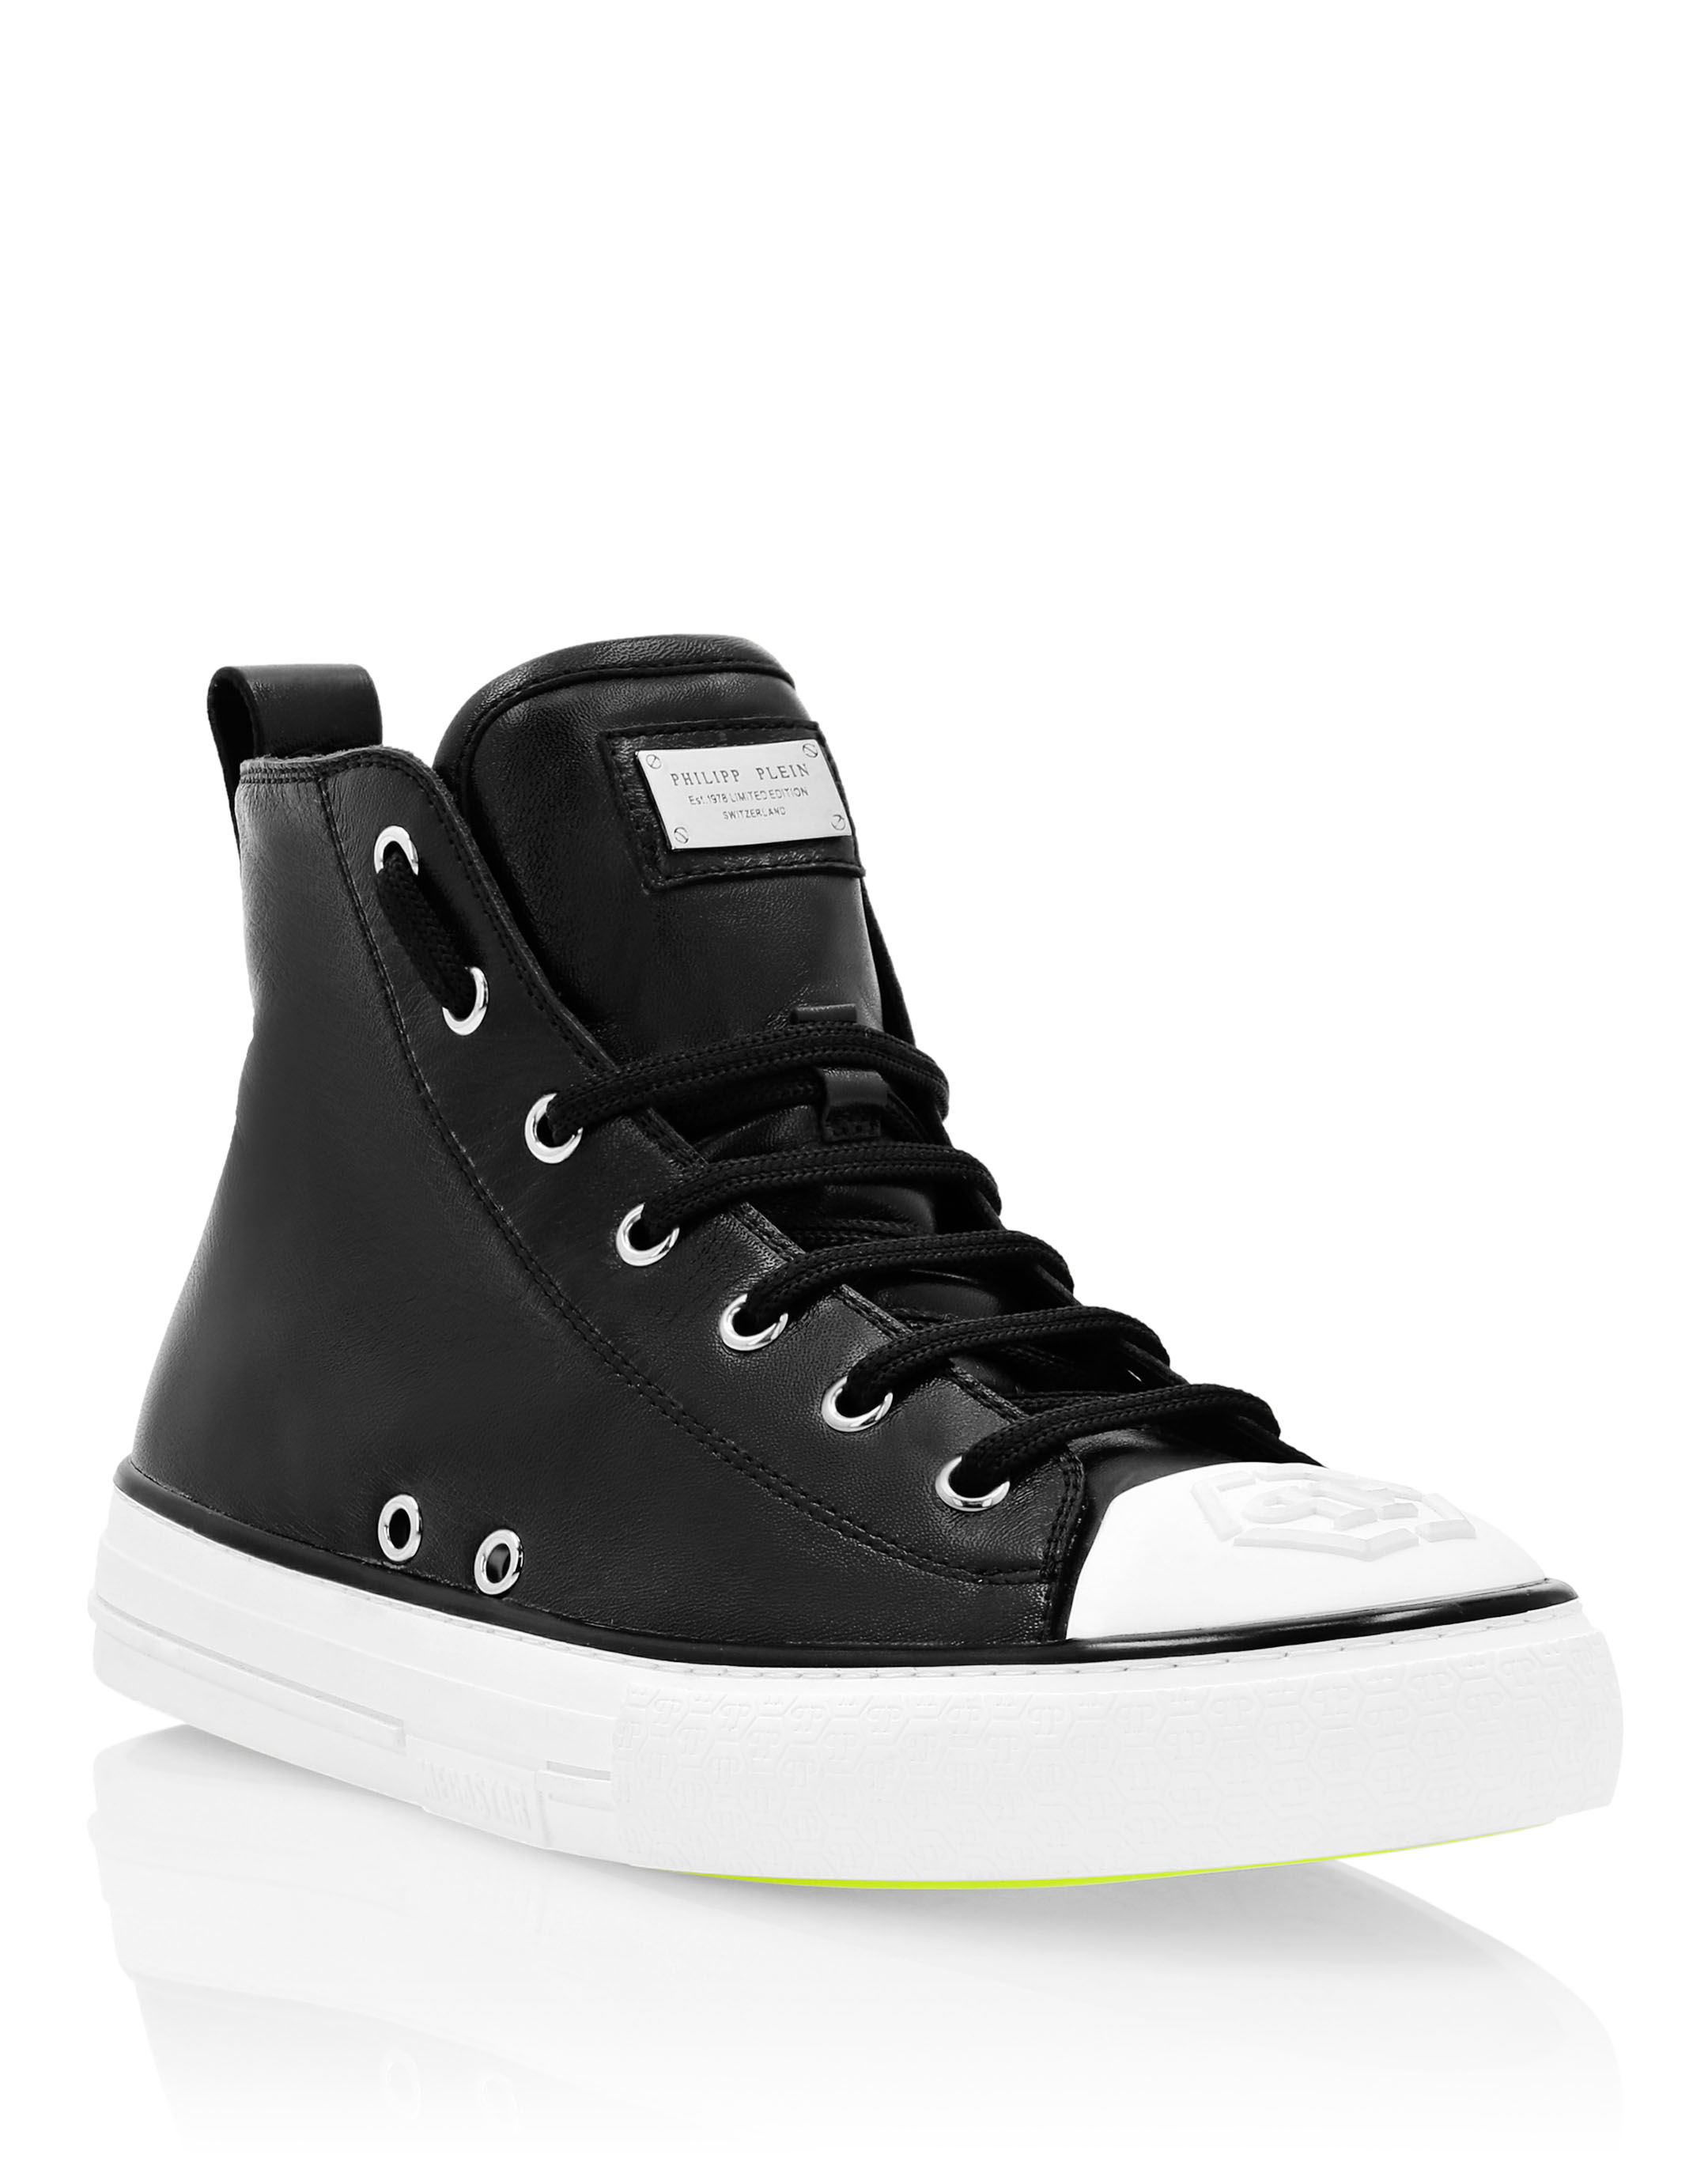 Converse White Leather Hi Tops Online Cheap, Save 65% | jlcatj.gob.mx